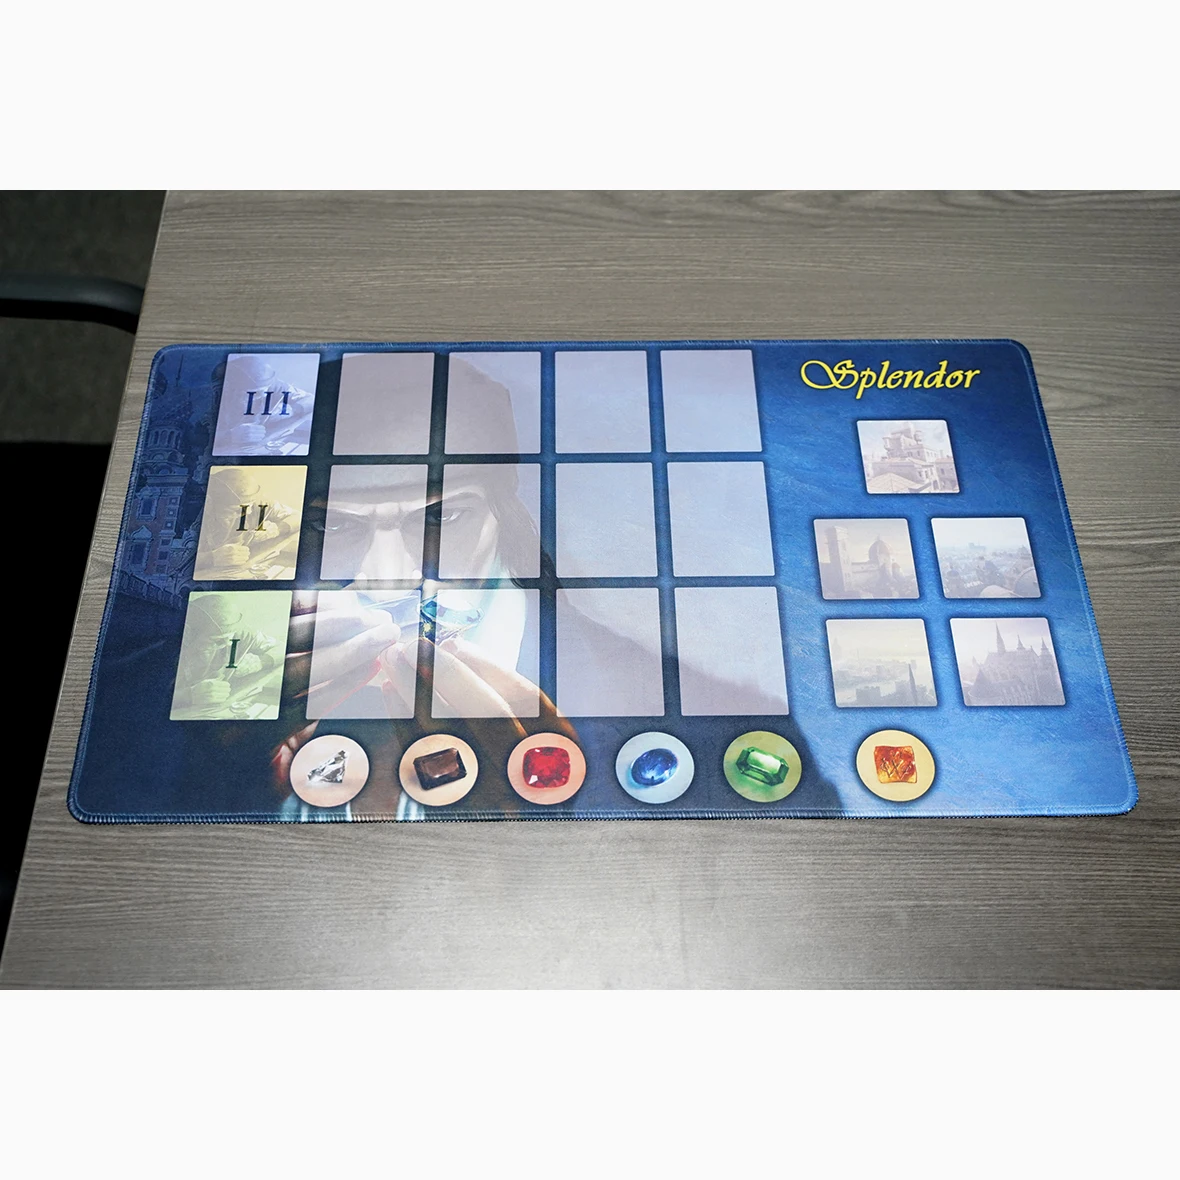 Splendor Board Game Playmat Map Mat Board Game Accessories Mat Large Original Size 1:1 Scale Map